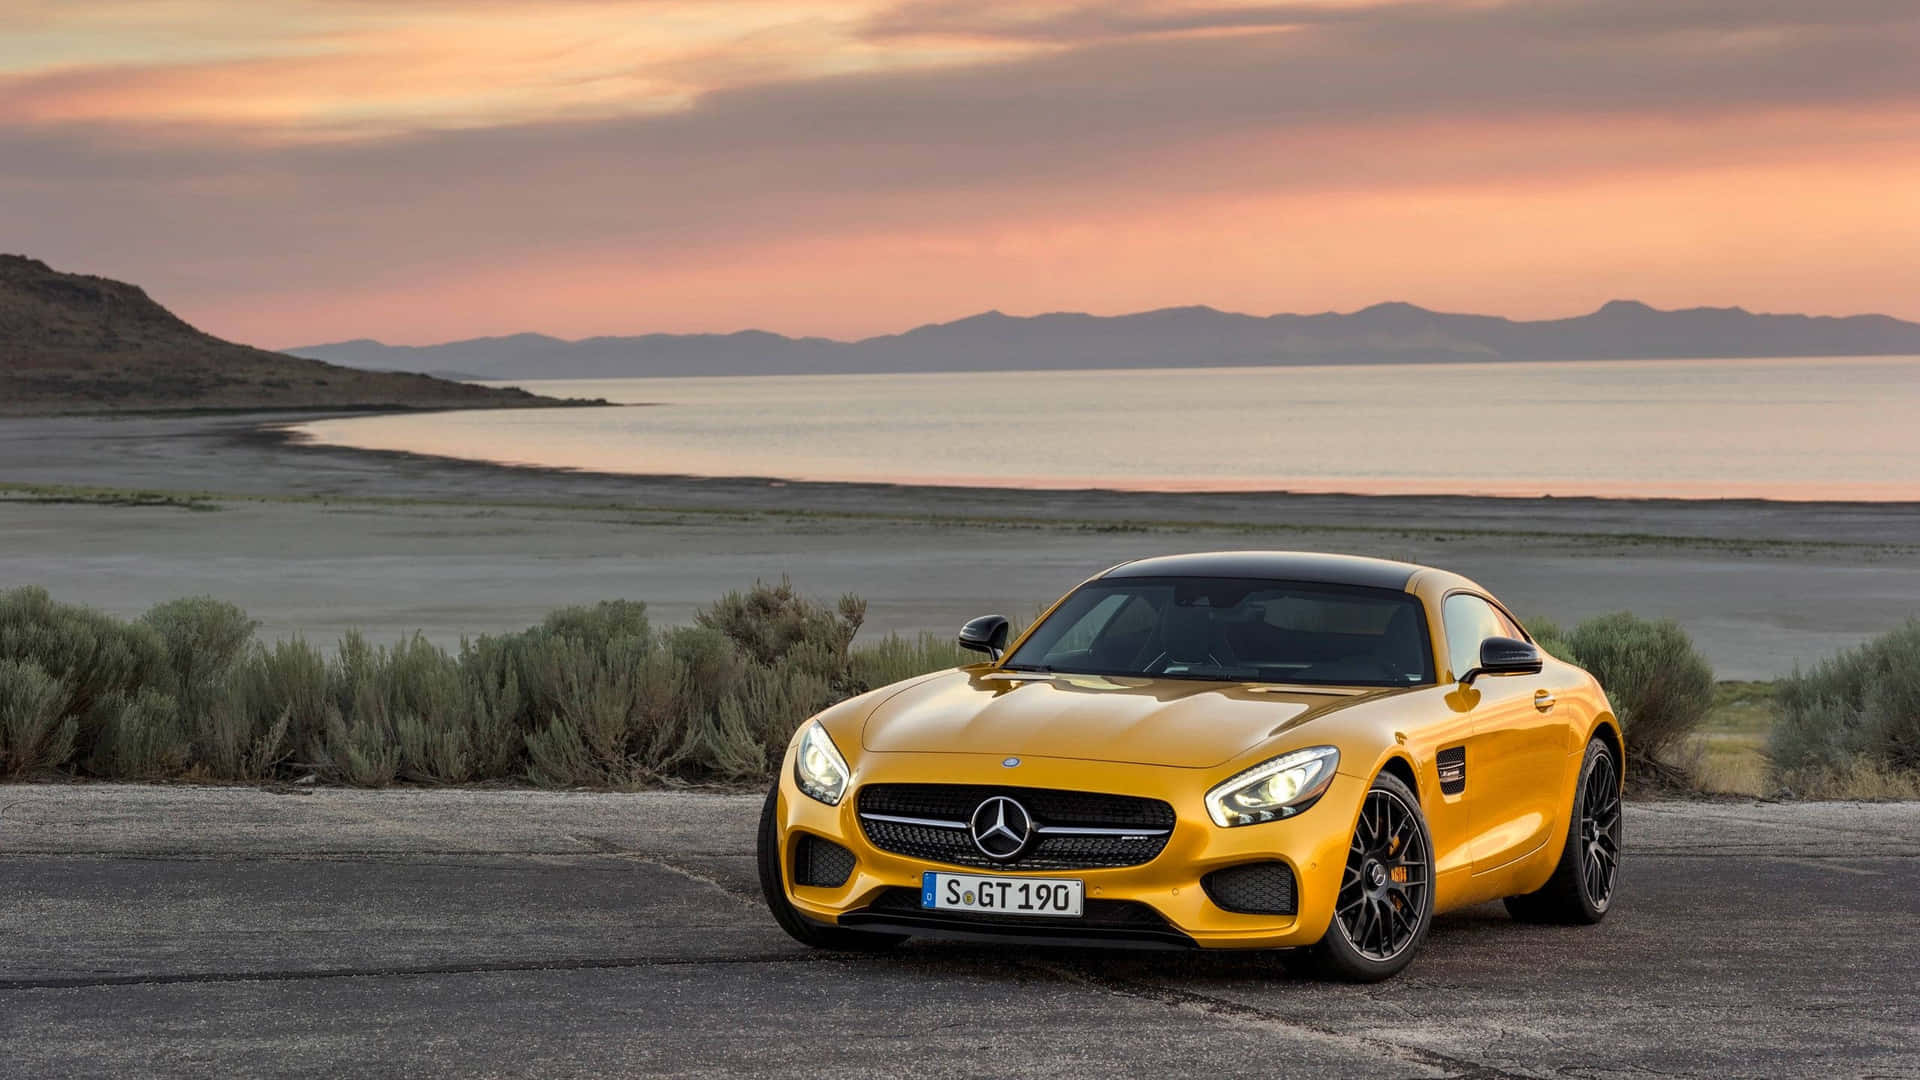 Gold Cars Mercedes Benz Sunset Background